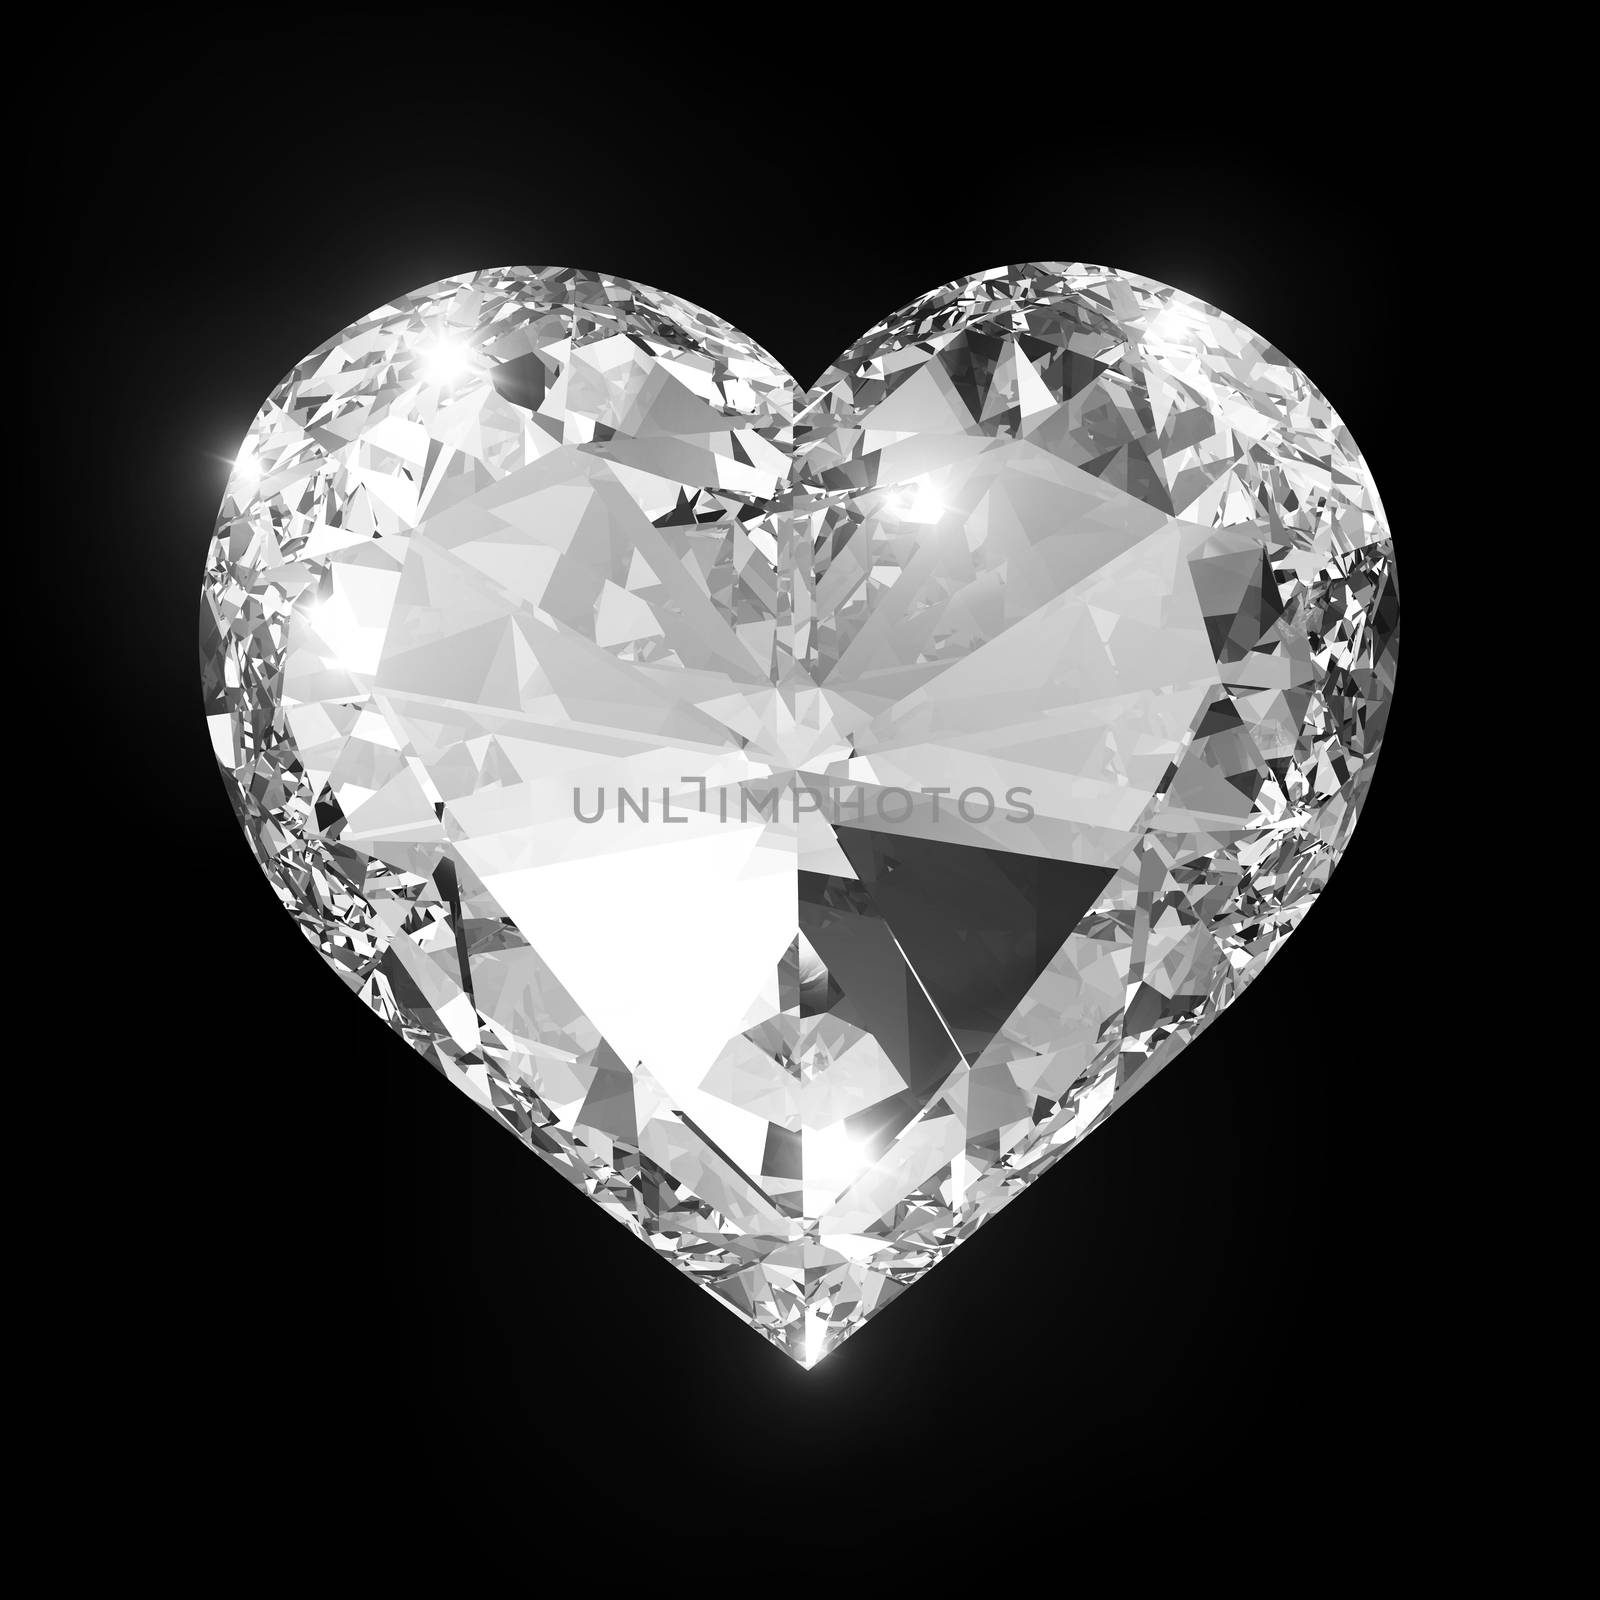 Luxury diamond heart on black background by 123dartist